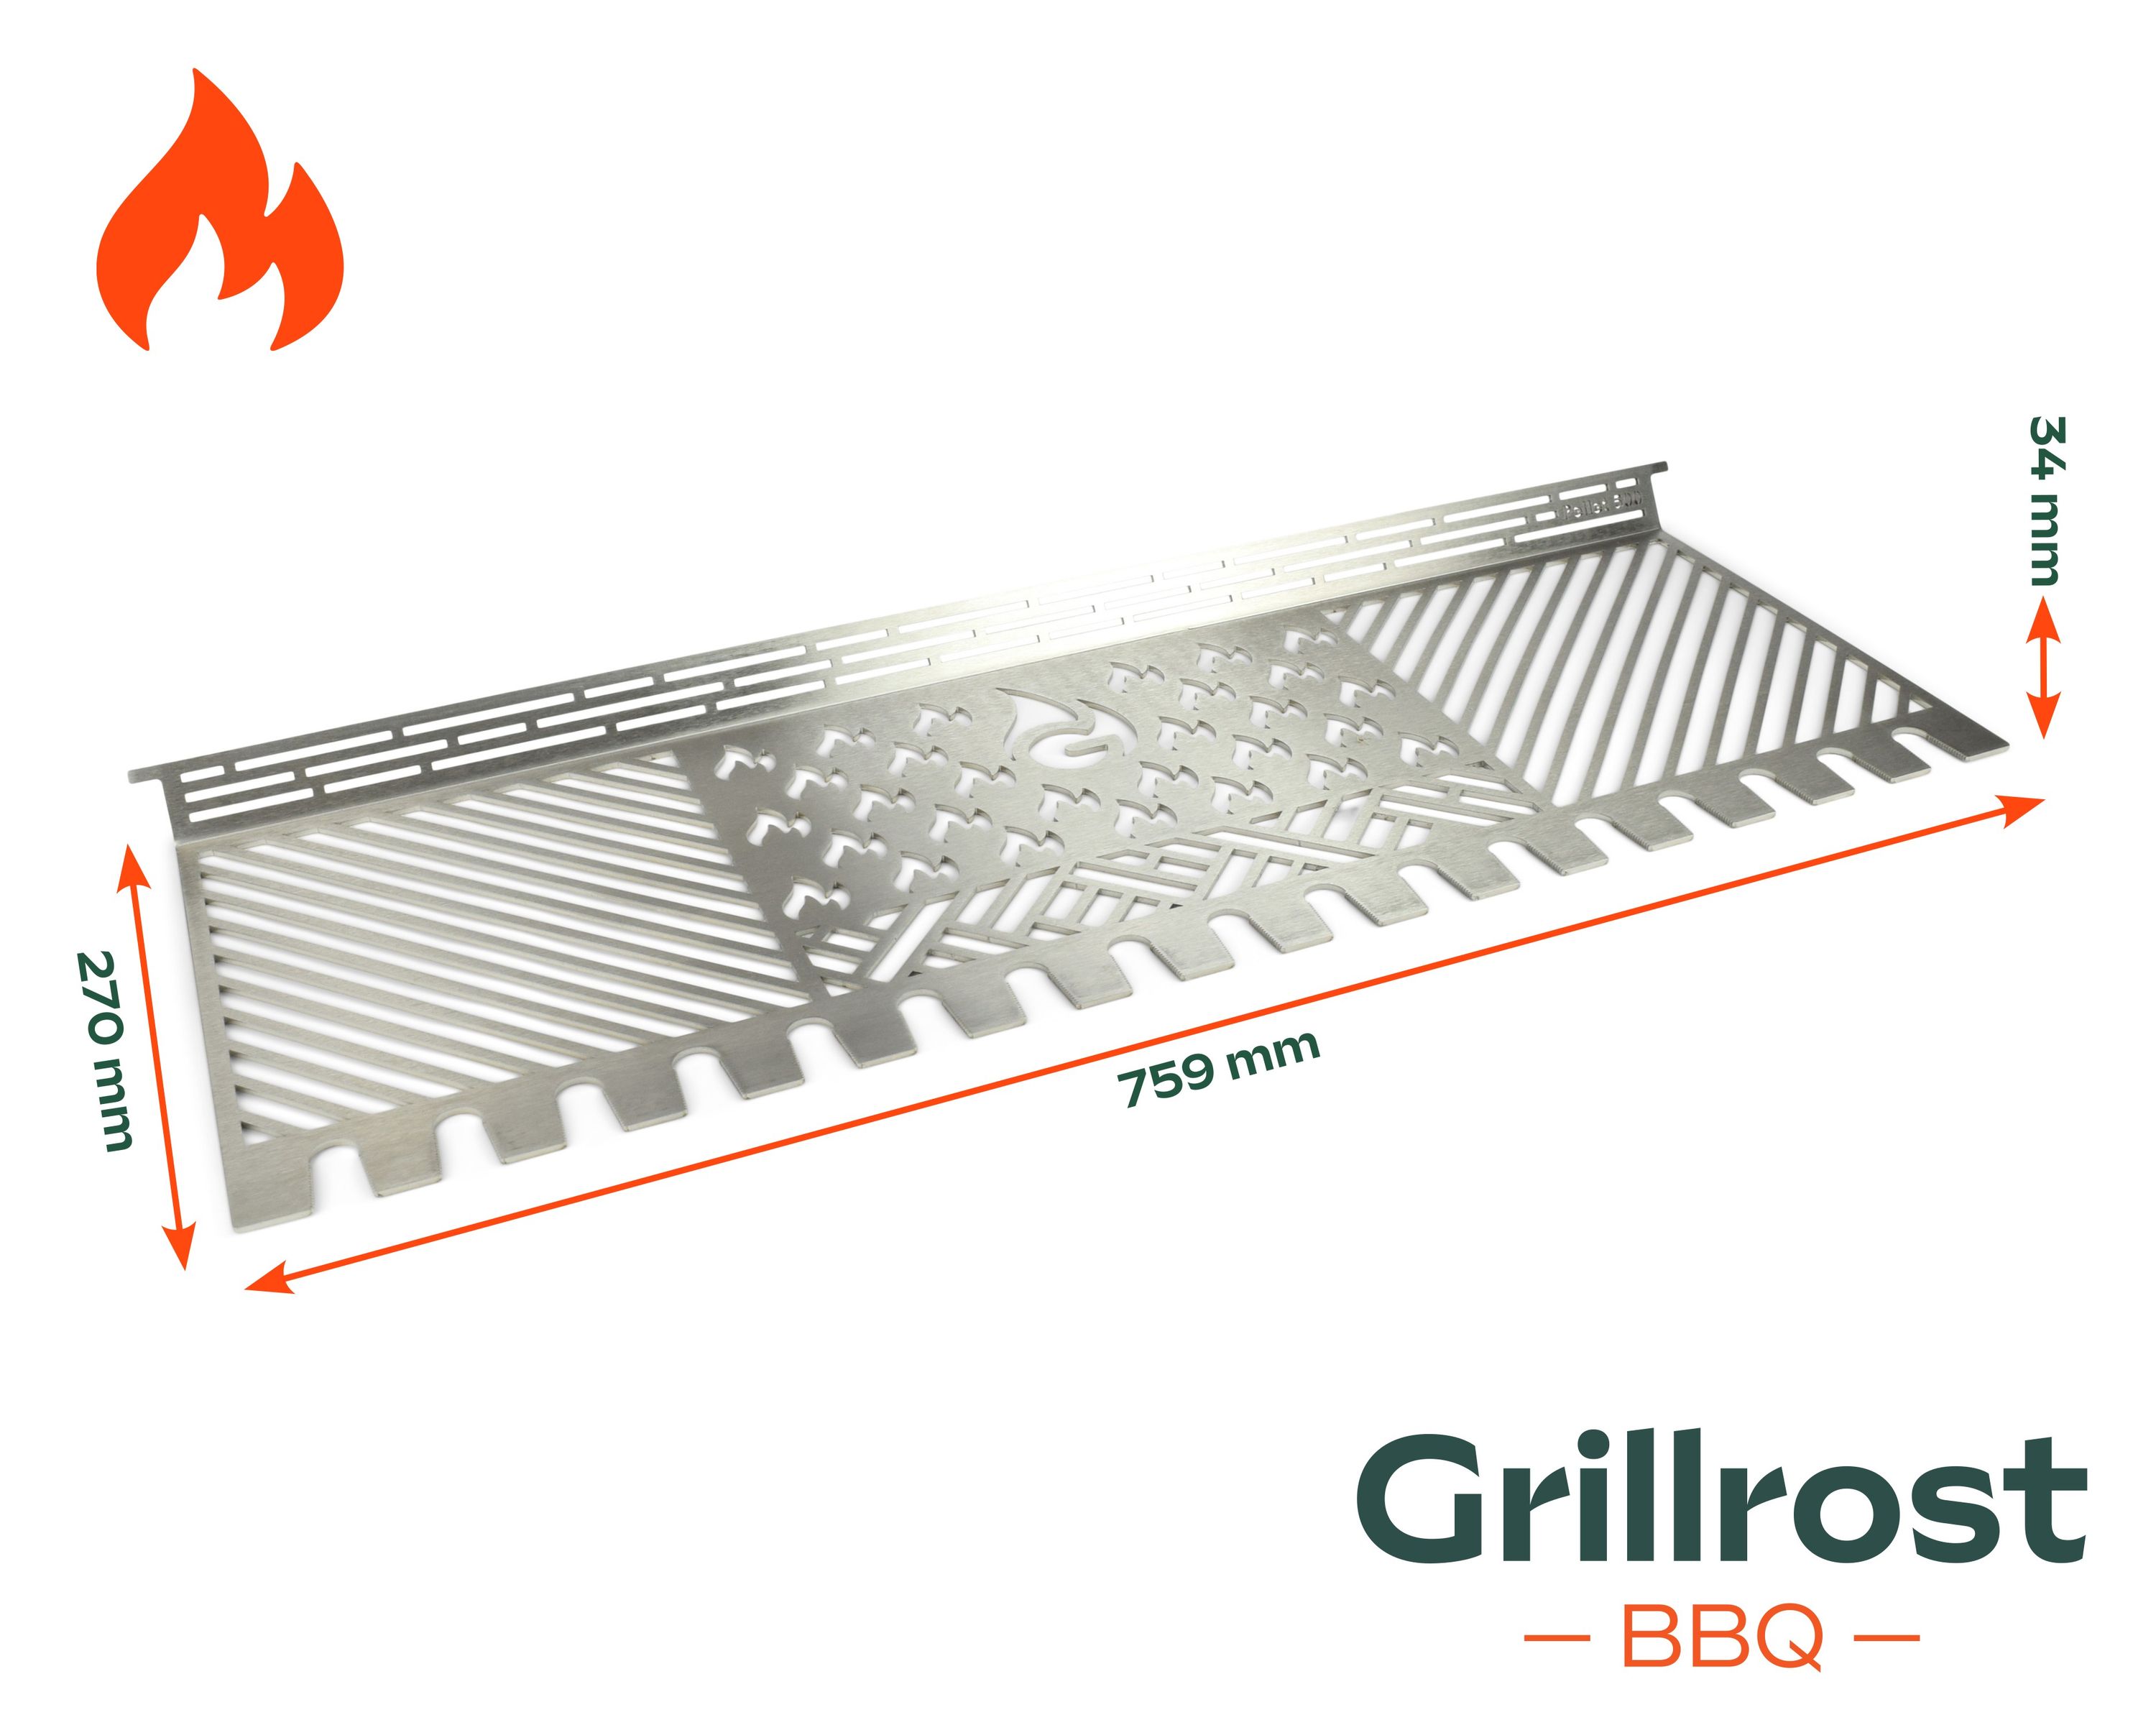 Stainless steel MultiStation for Broil King Regal Pellet 500 - Hot grid